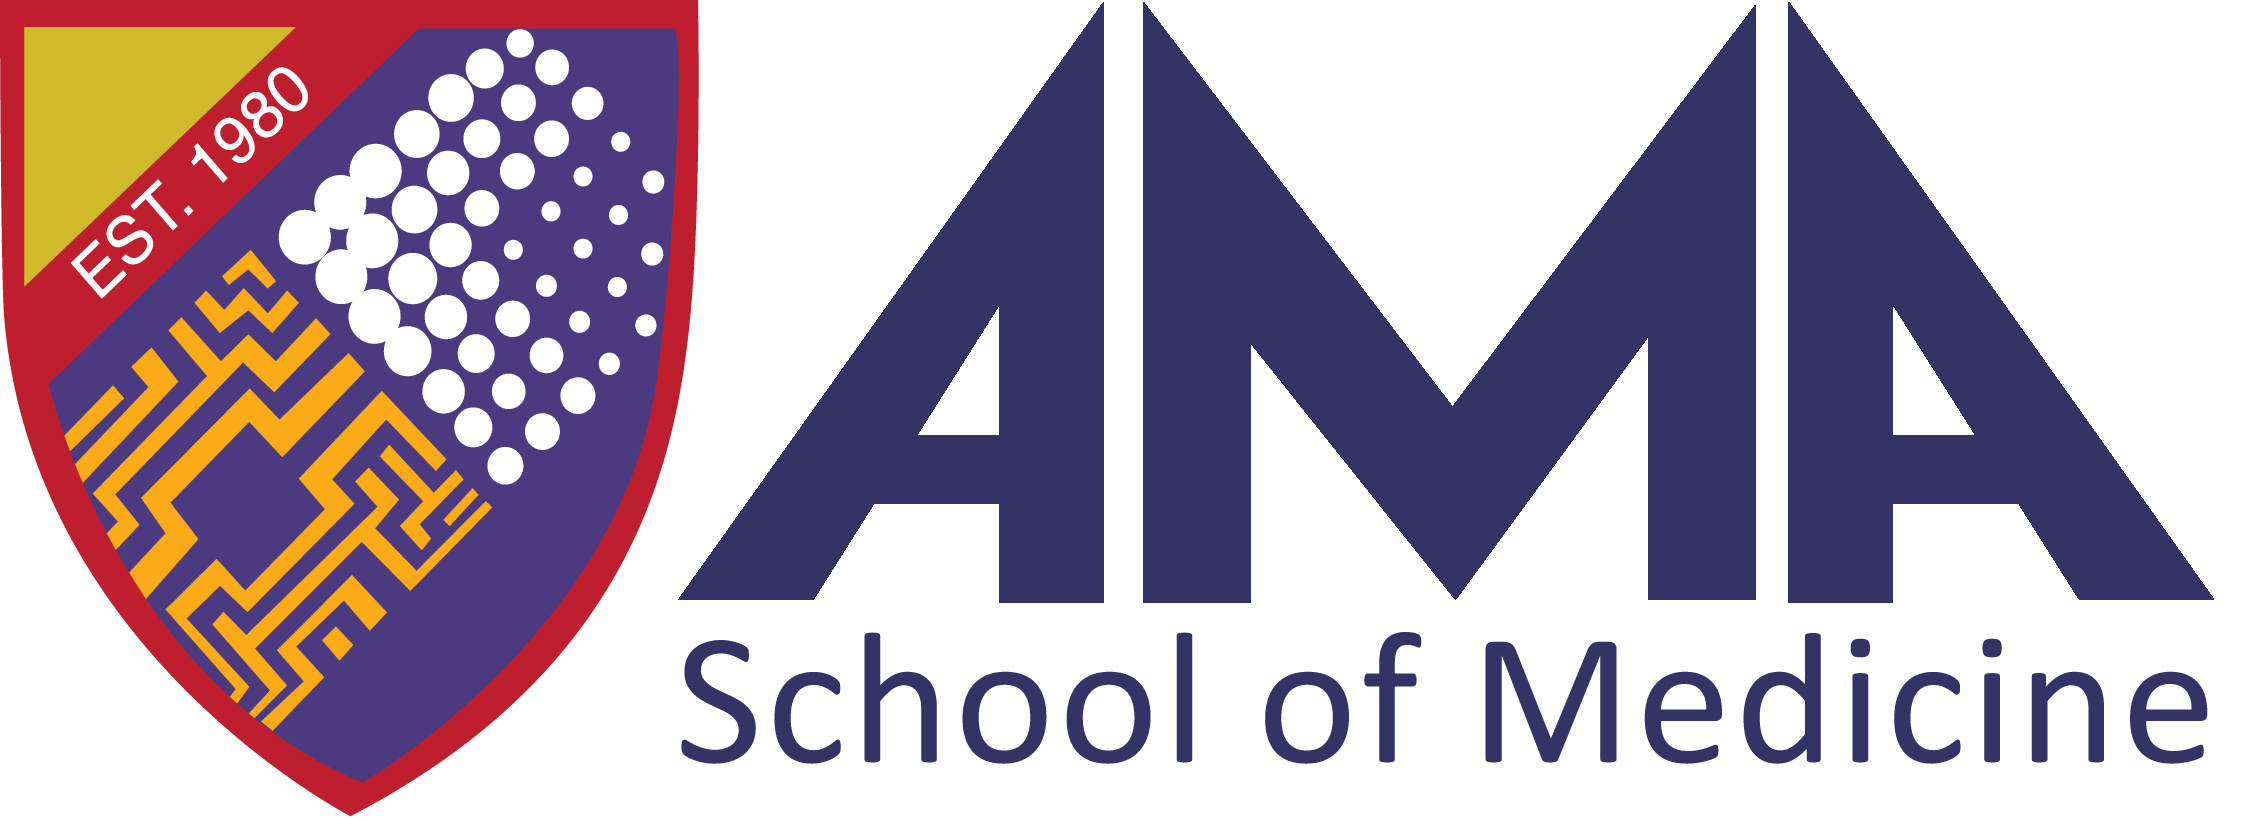 AMA School of Medicine, Baguio City Philippines